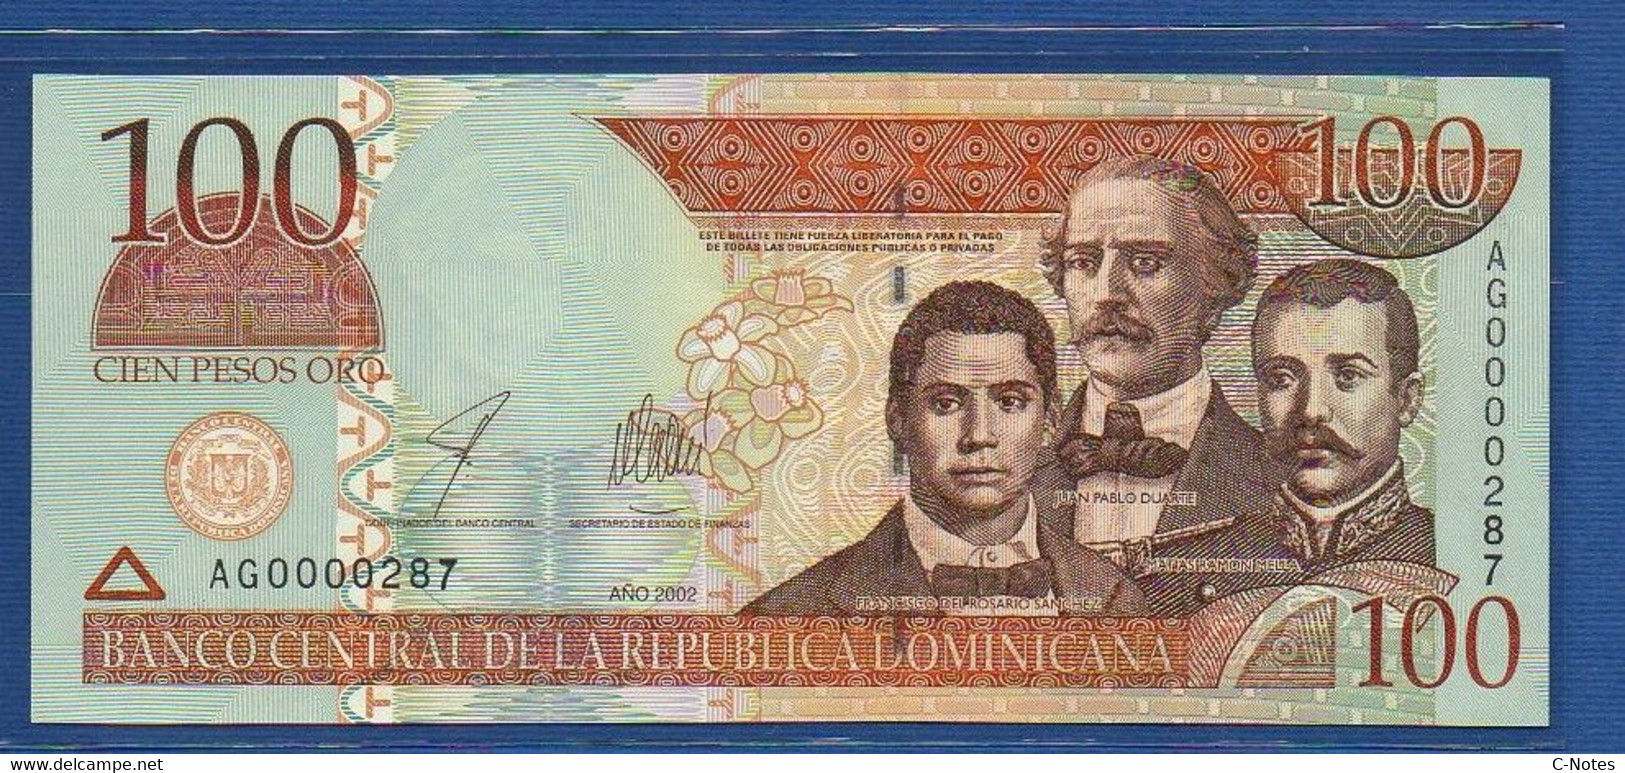 DOMINICAN REPUBLIC - P.175 – 100 Pesos Oro 2002 UNC, Serie AG 0000287 - Commemorative Issue - Low Serial Number - Repubblica Dominicana